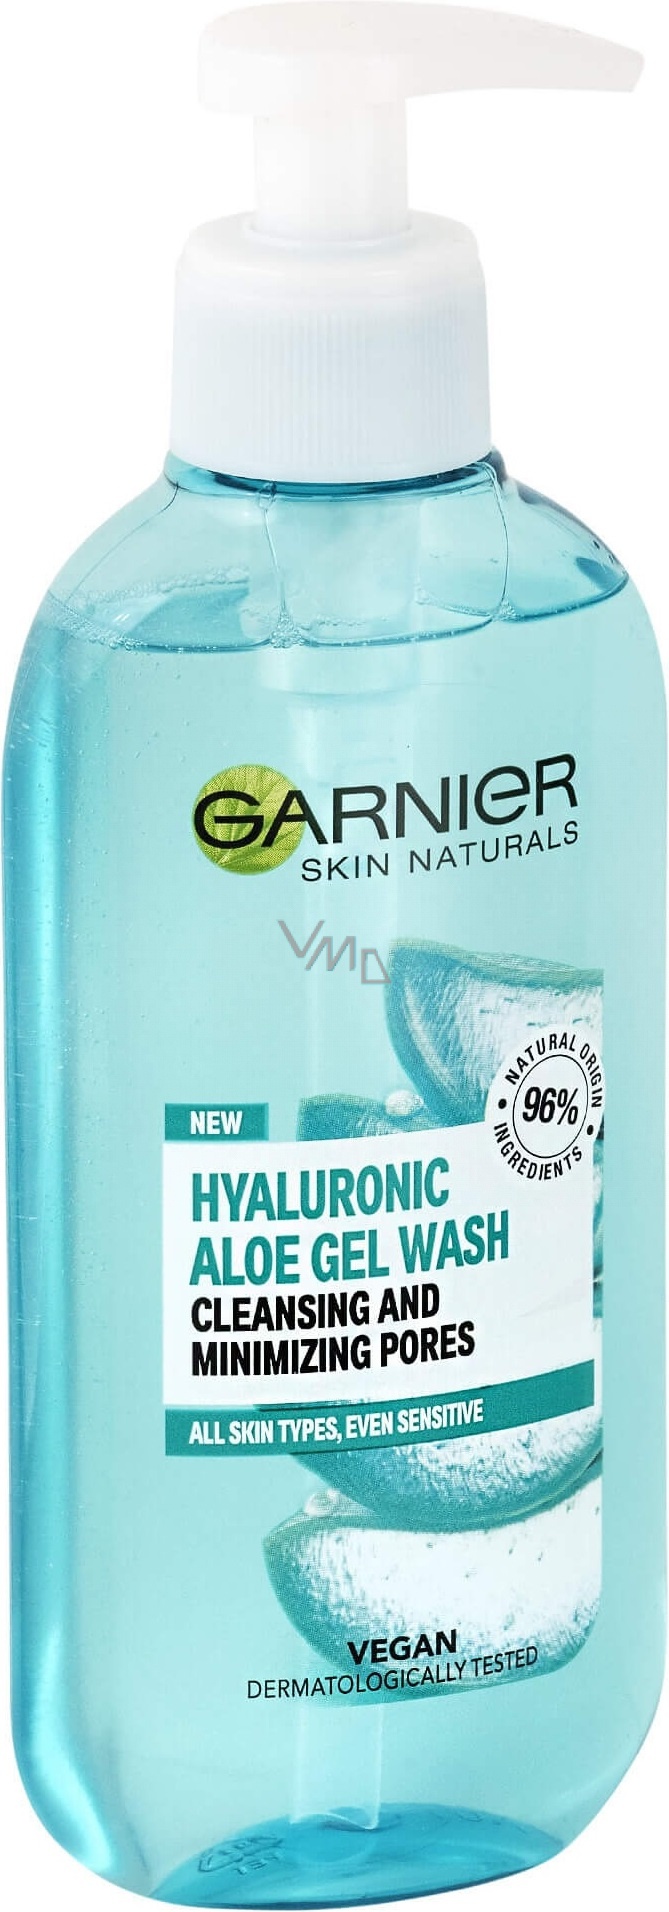 Garnier Hyaluronic Aloe Gel Cleaner